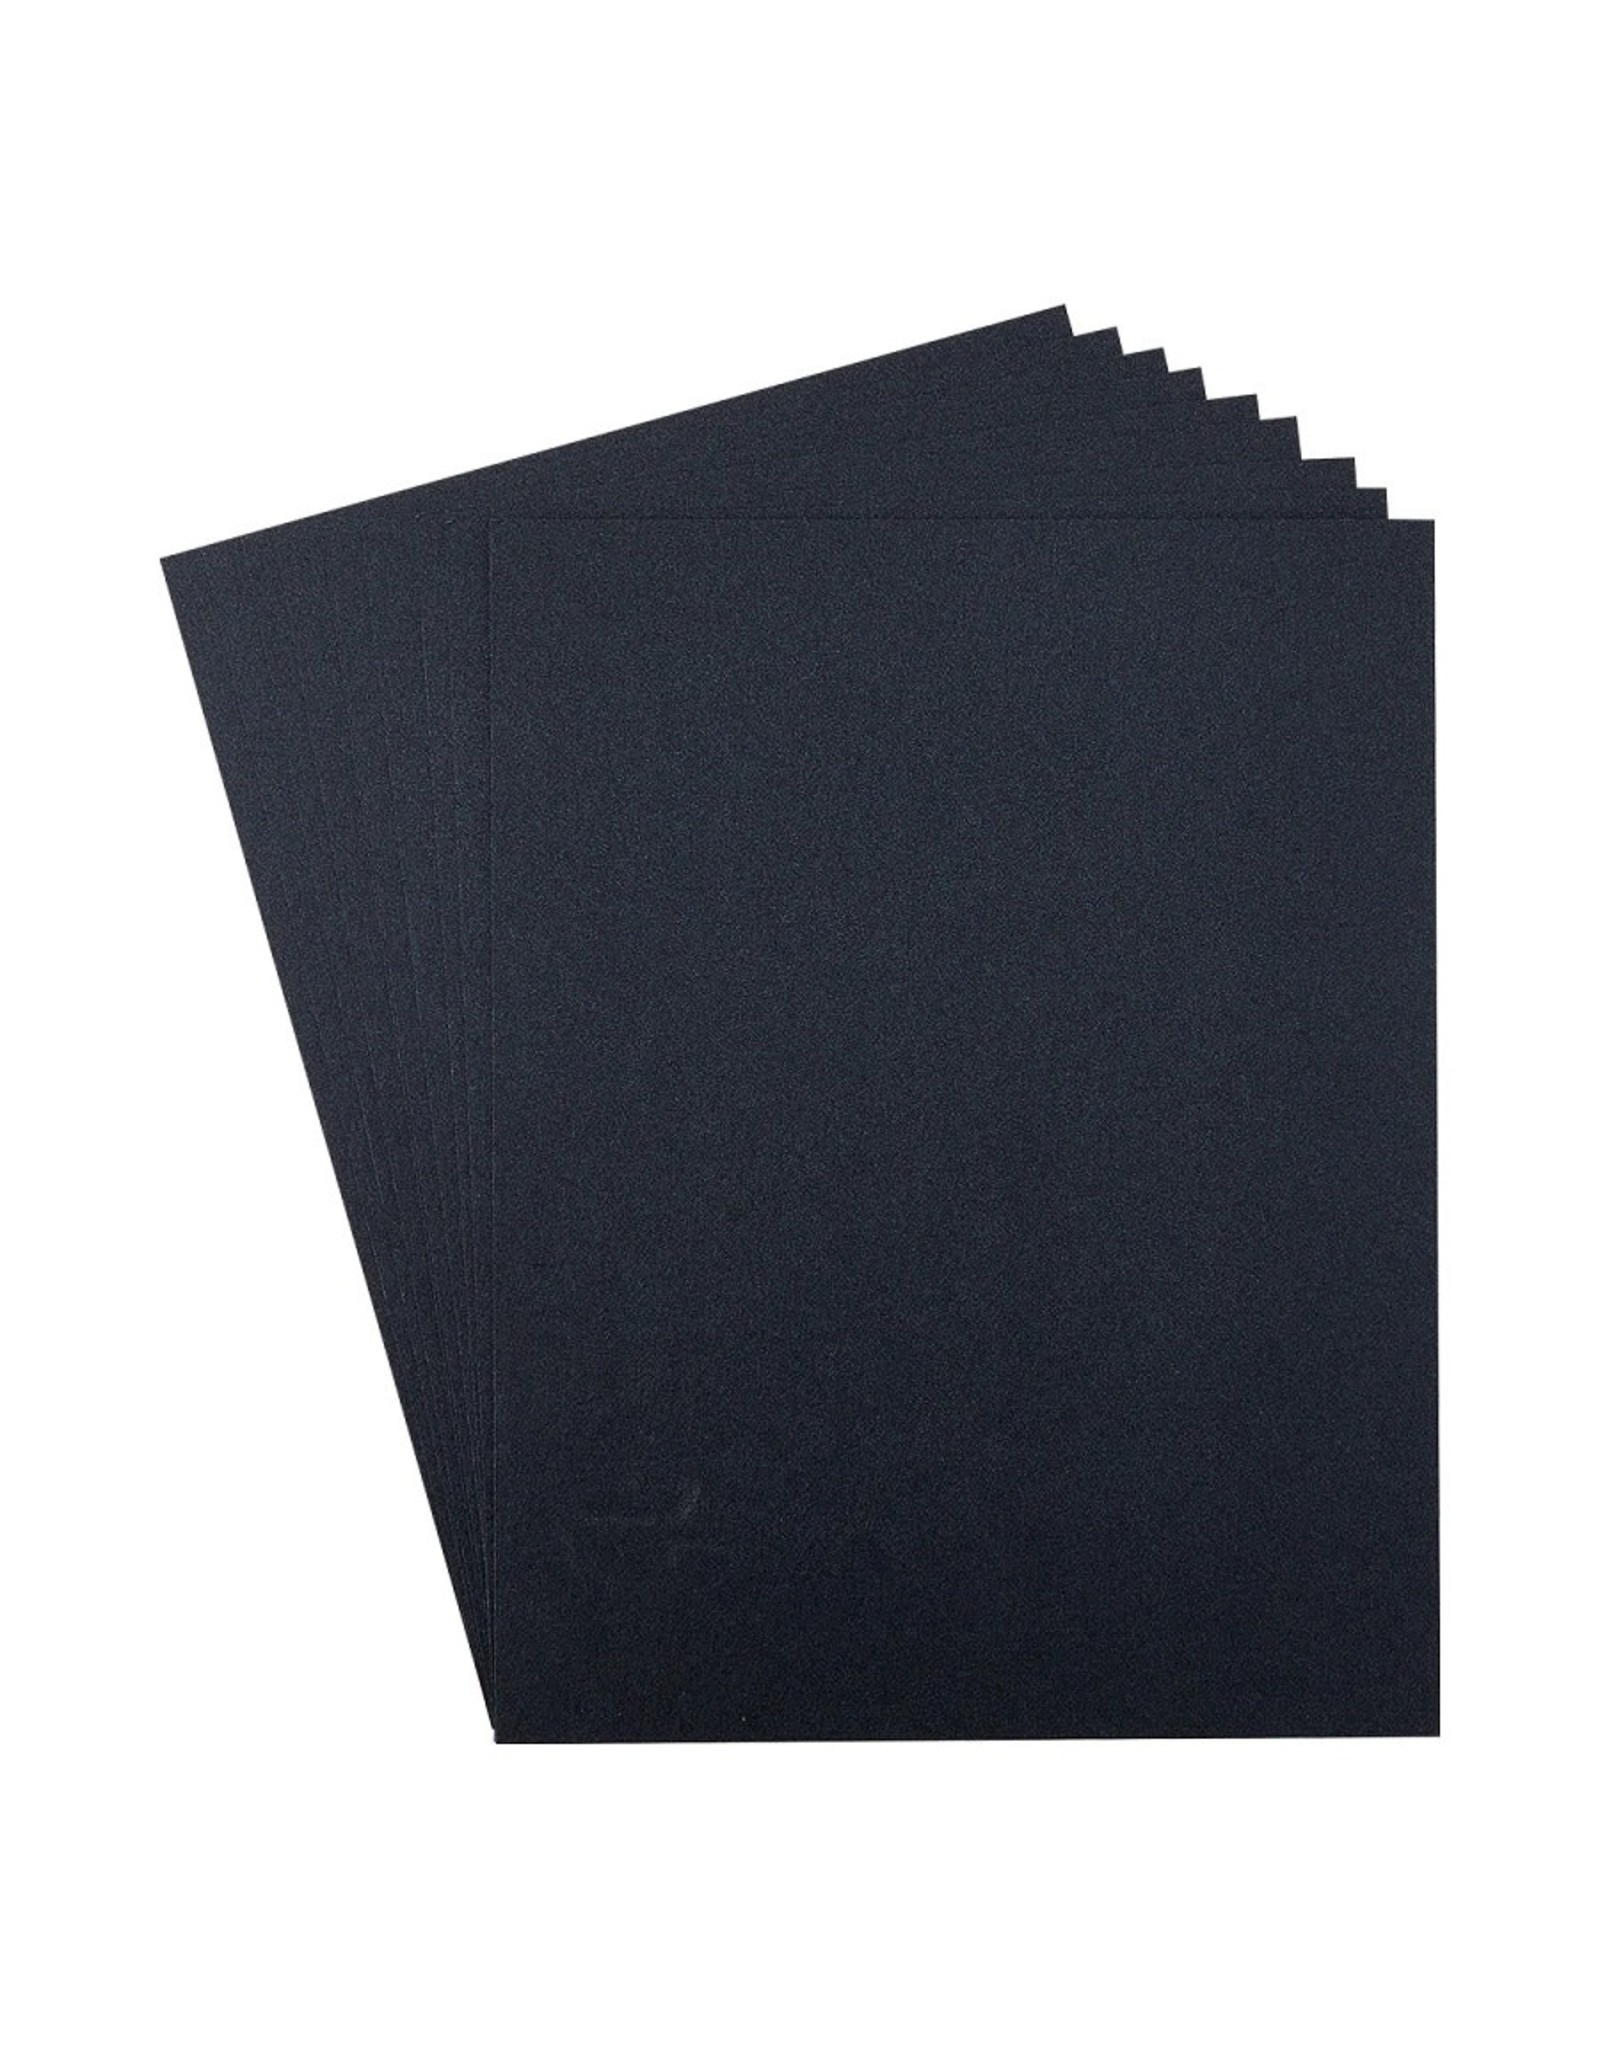 Spellbinders Color Essentials Cardstock 8.5 x 11” - 10 Pack - Brushed Black